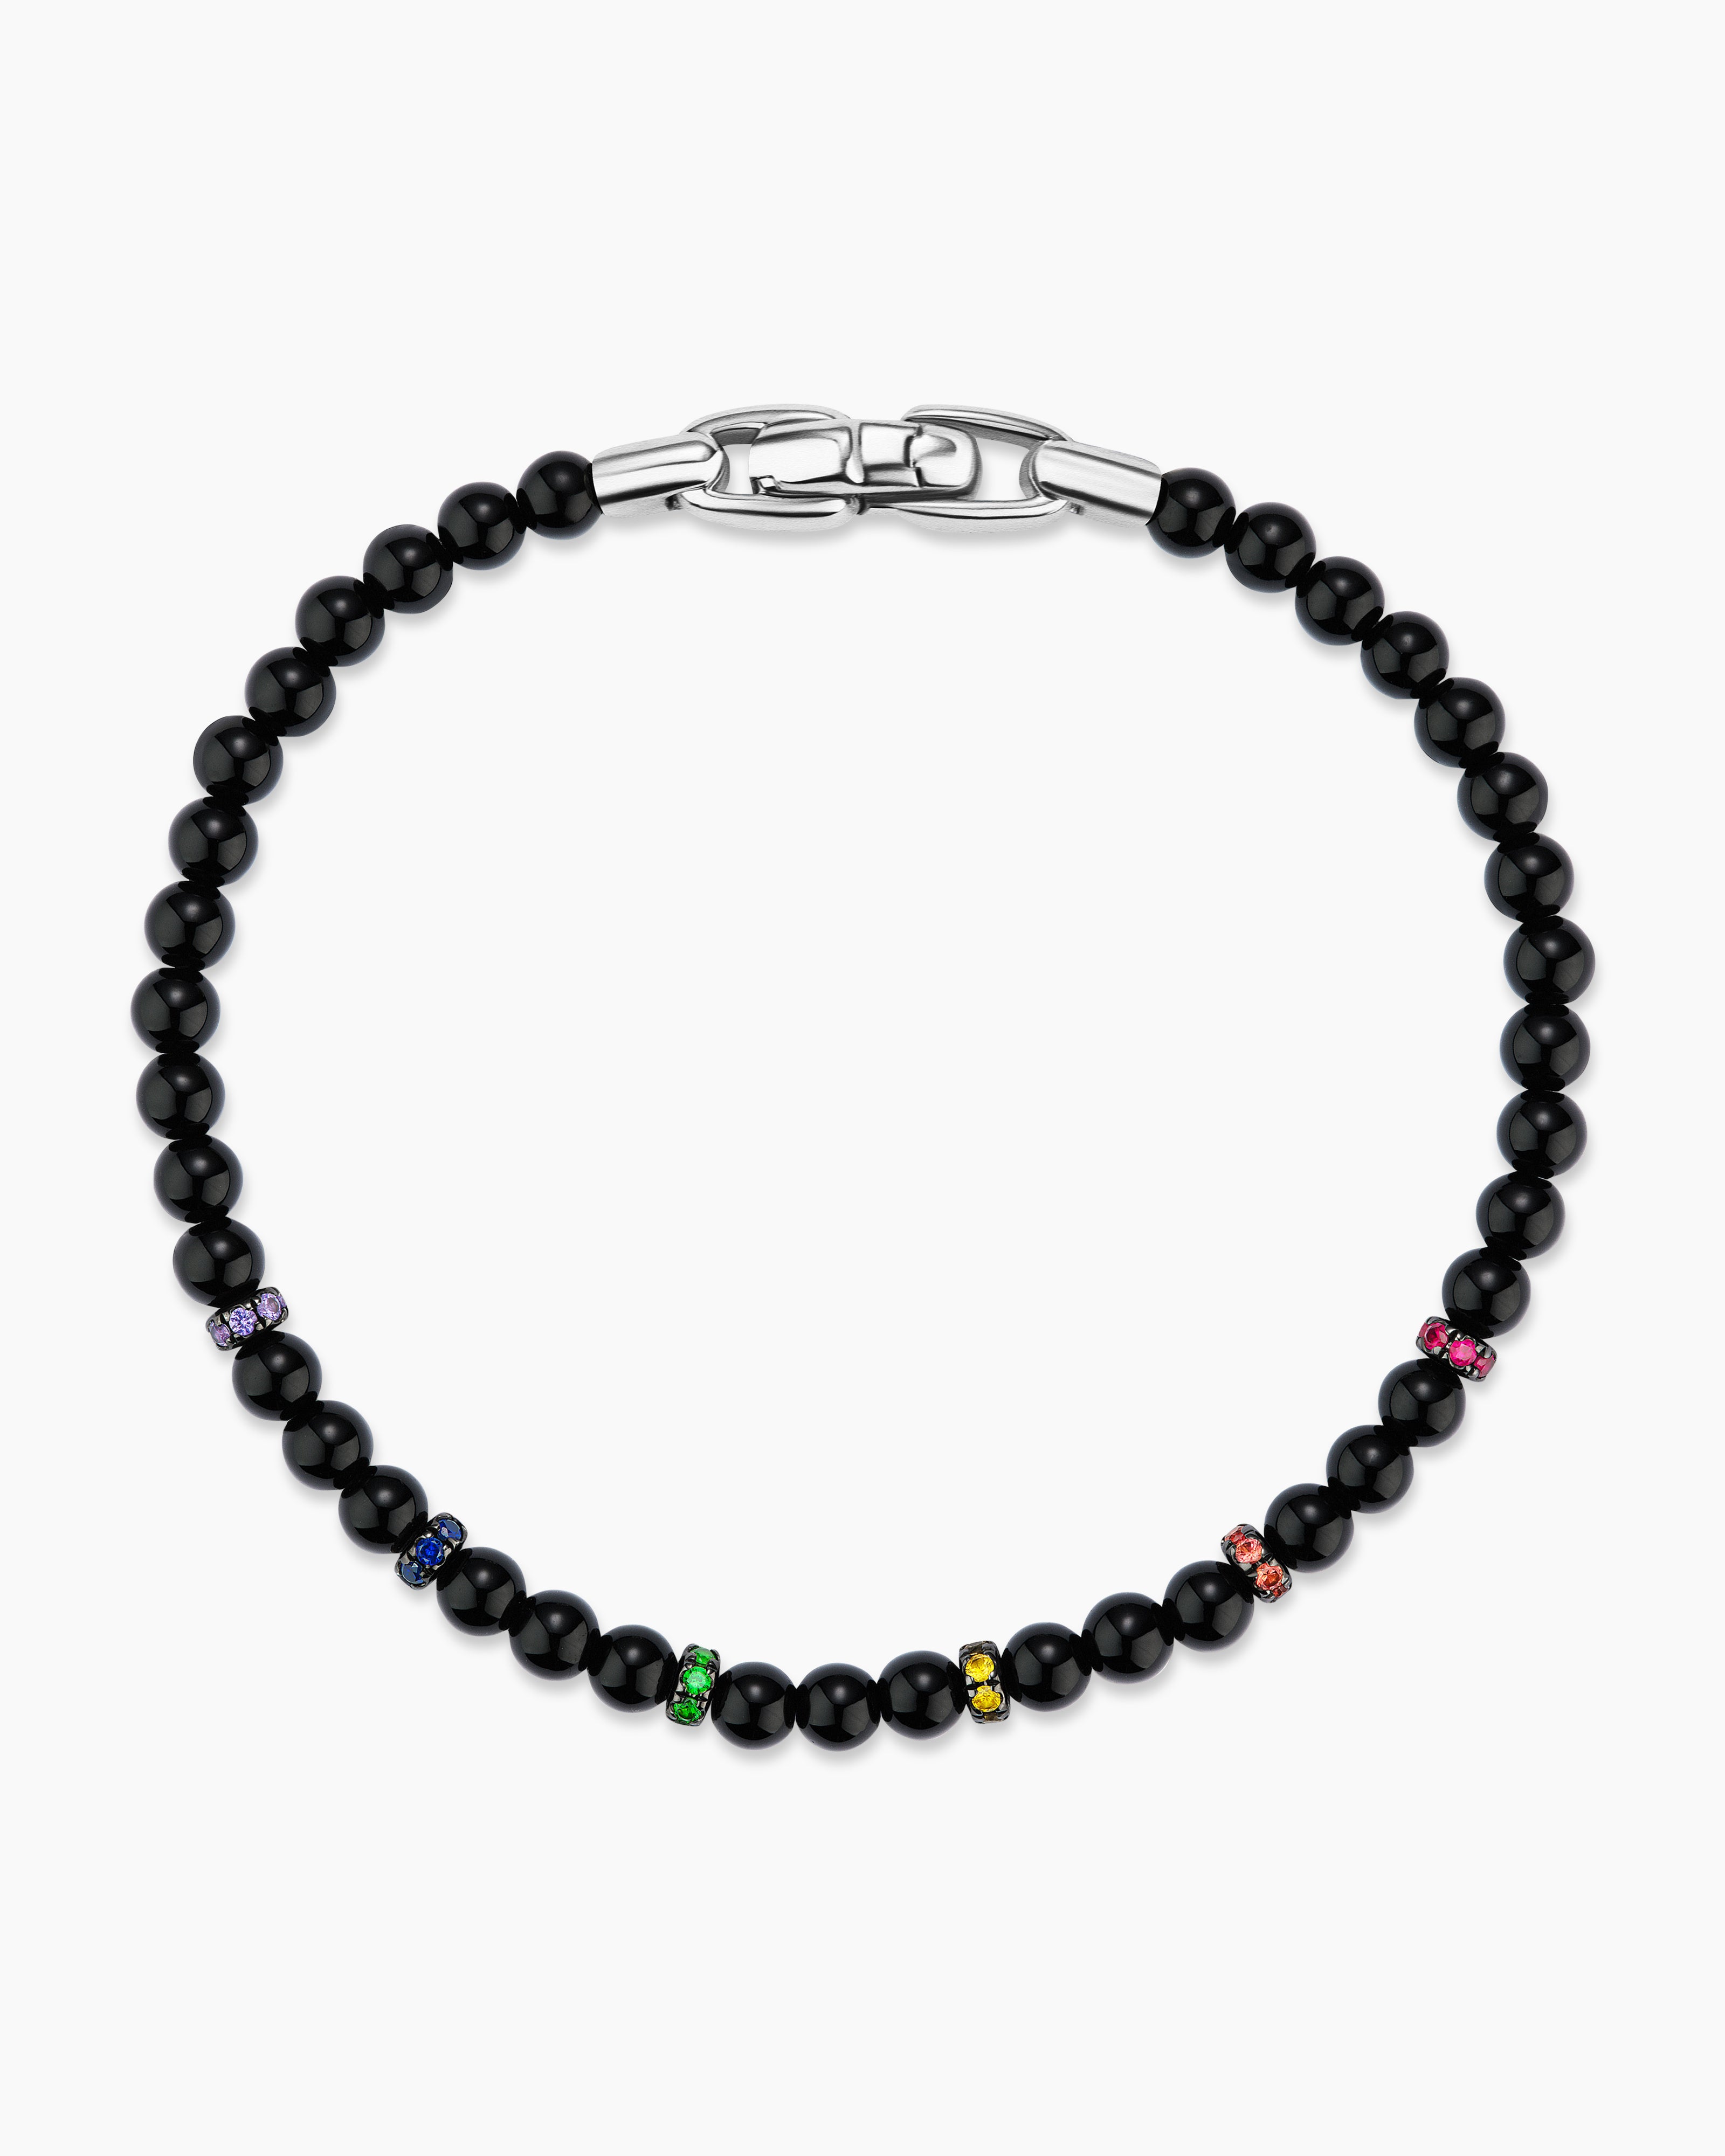 Bijoux Spiritual Beads Rainbow Bracelet in Sterling Yurman David Silver, 4mm 